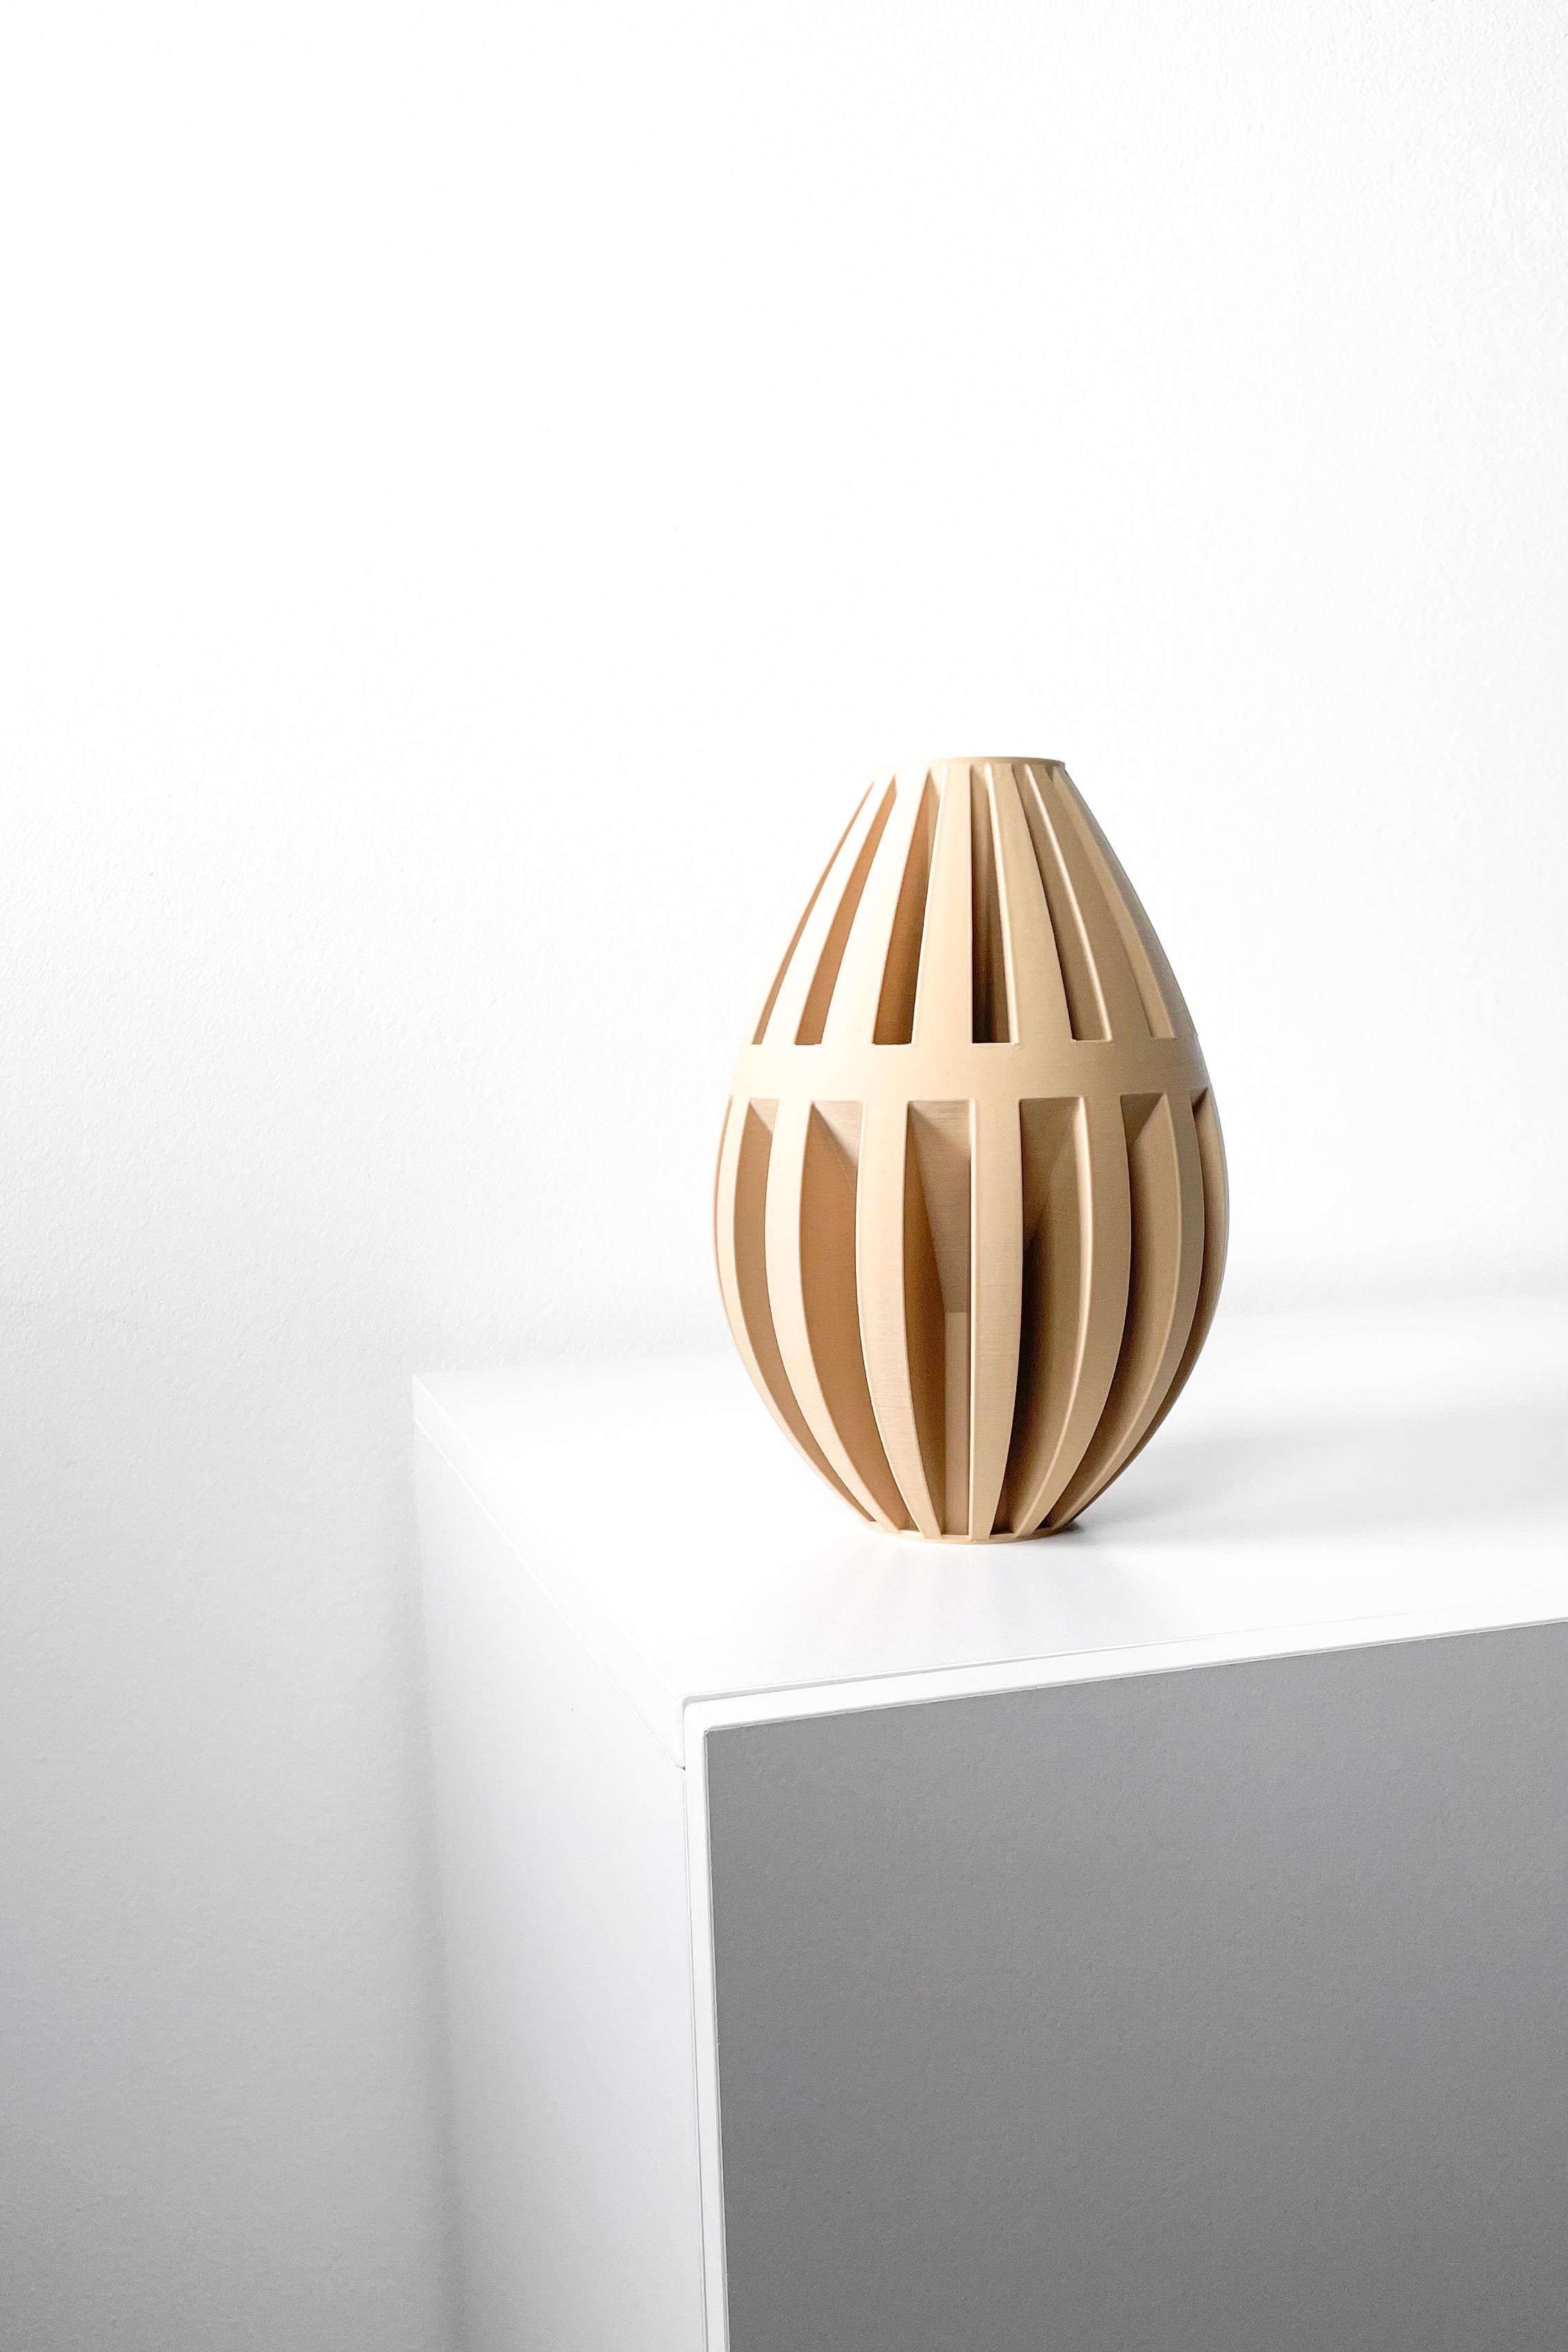 The Dansi Vase, Modern and Unique Home Decor for Dried and Flower Arrangements  | STL File 3d model